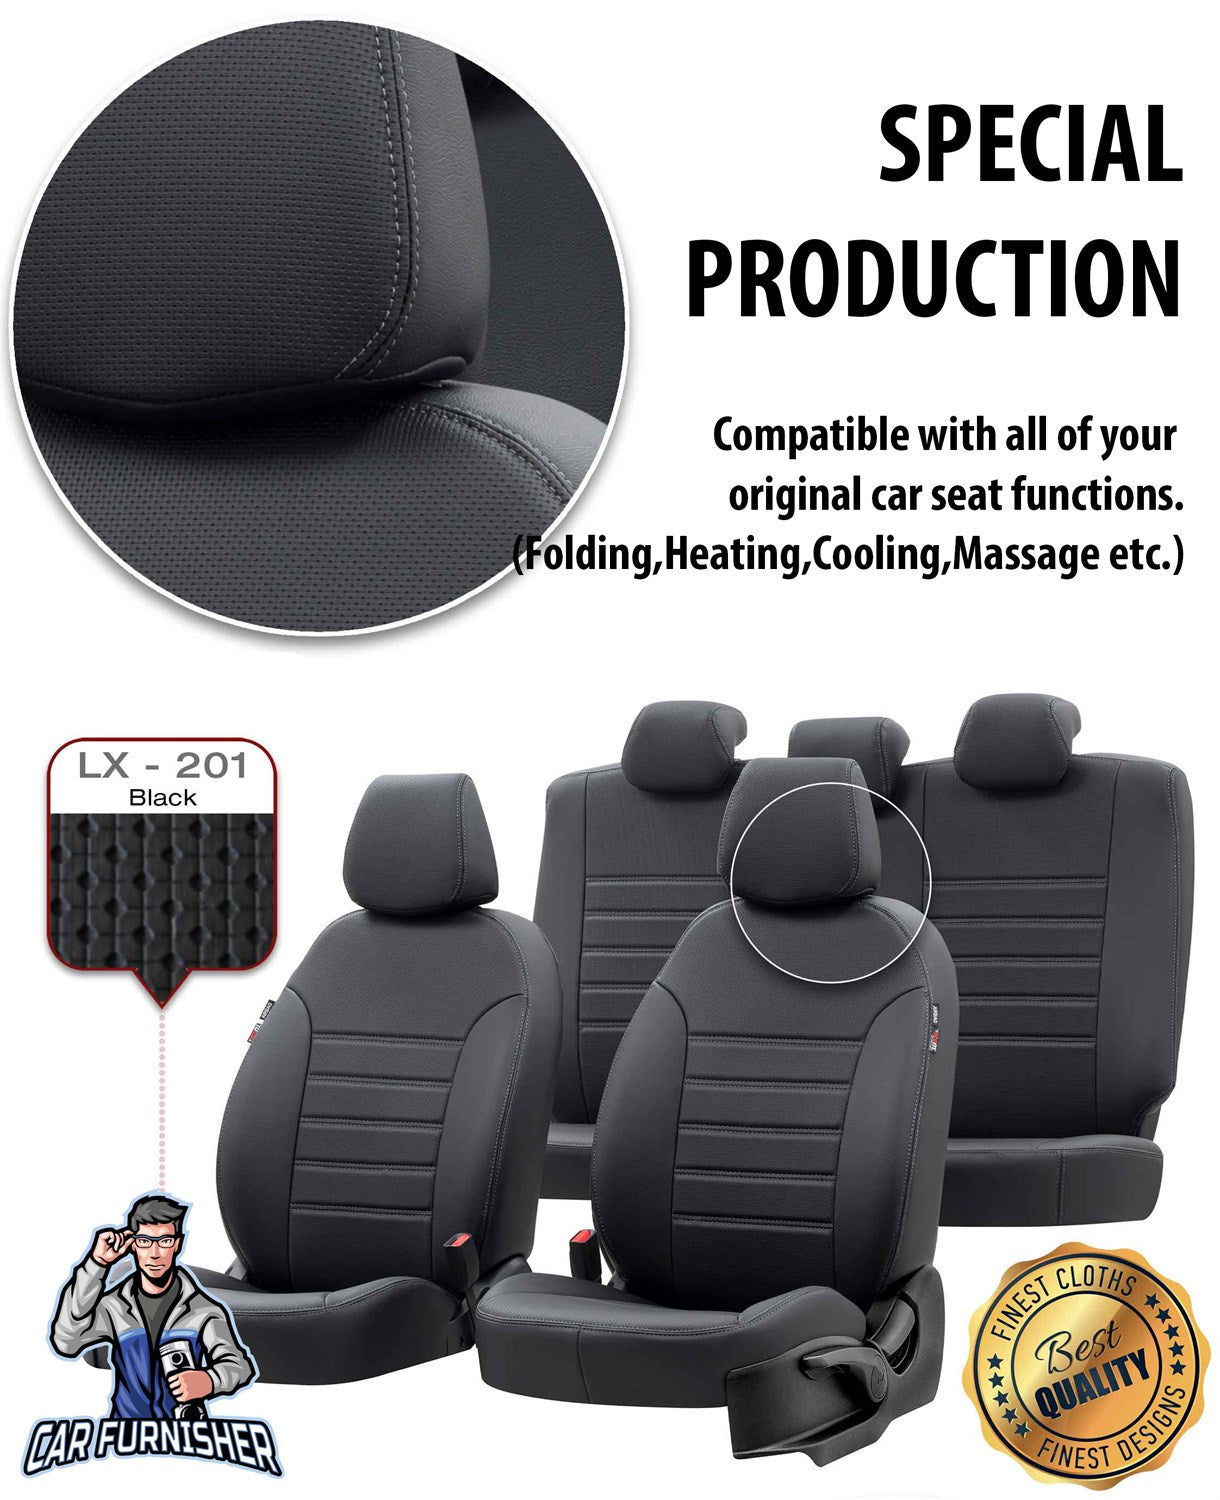 Isuzu Champion Seat Cover New York Leather Design Smoked Black Leather